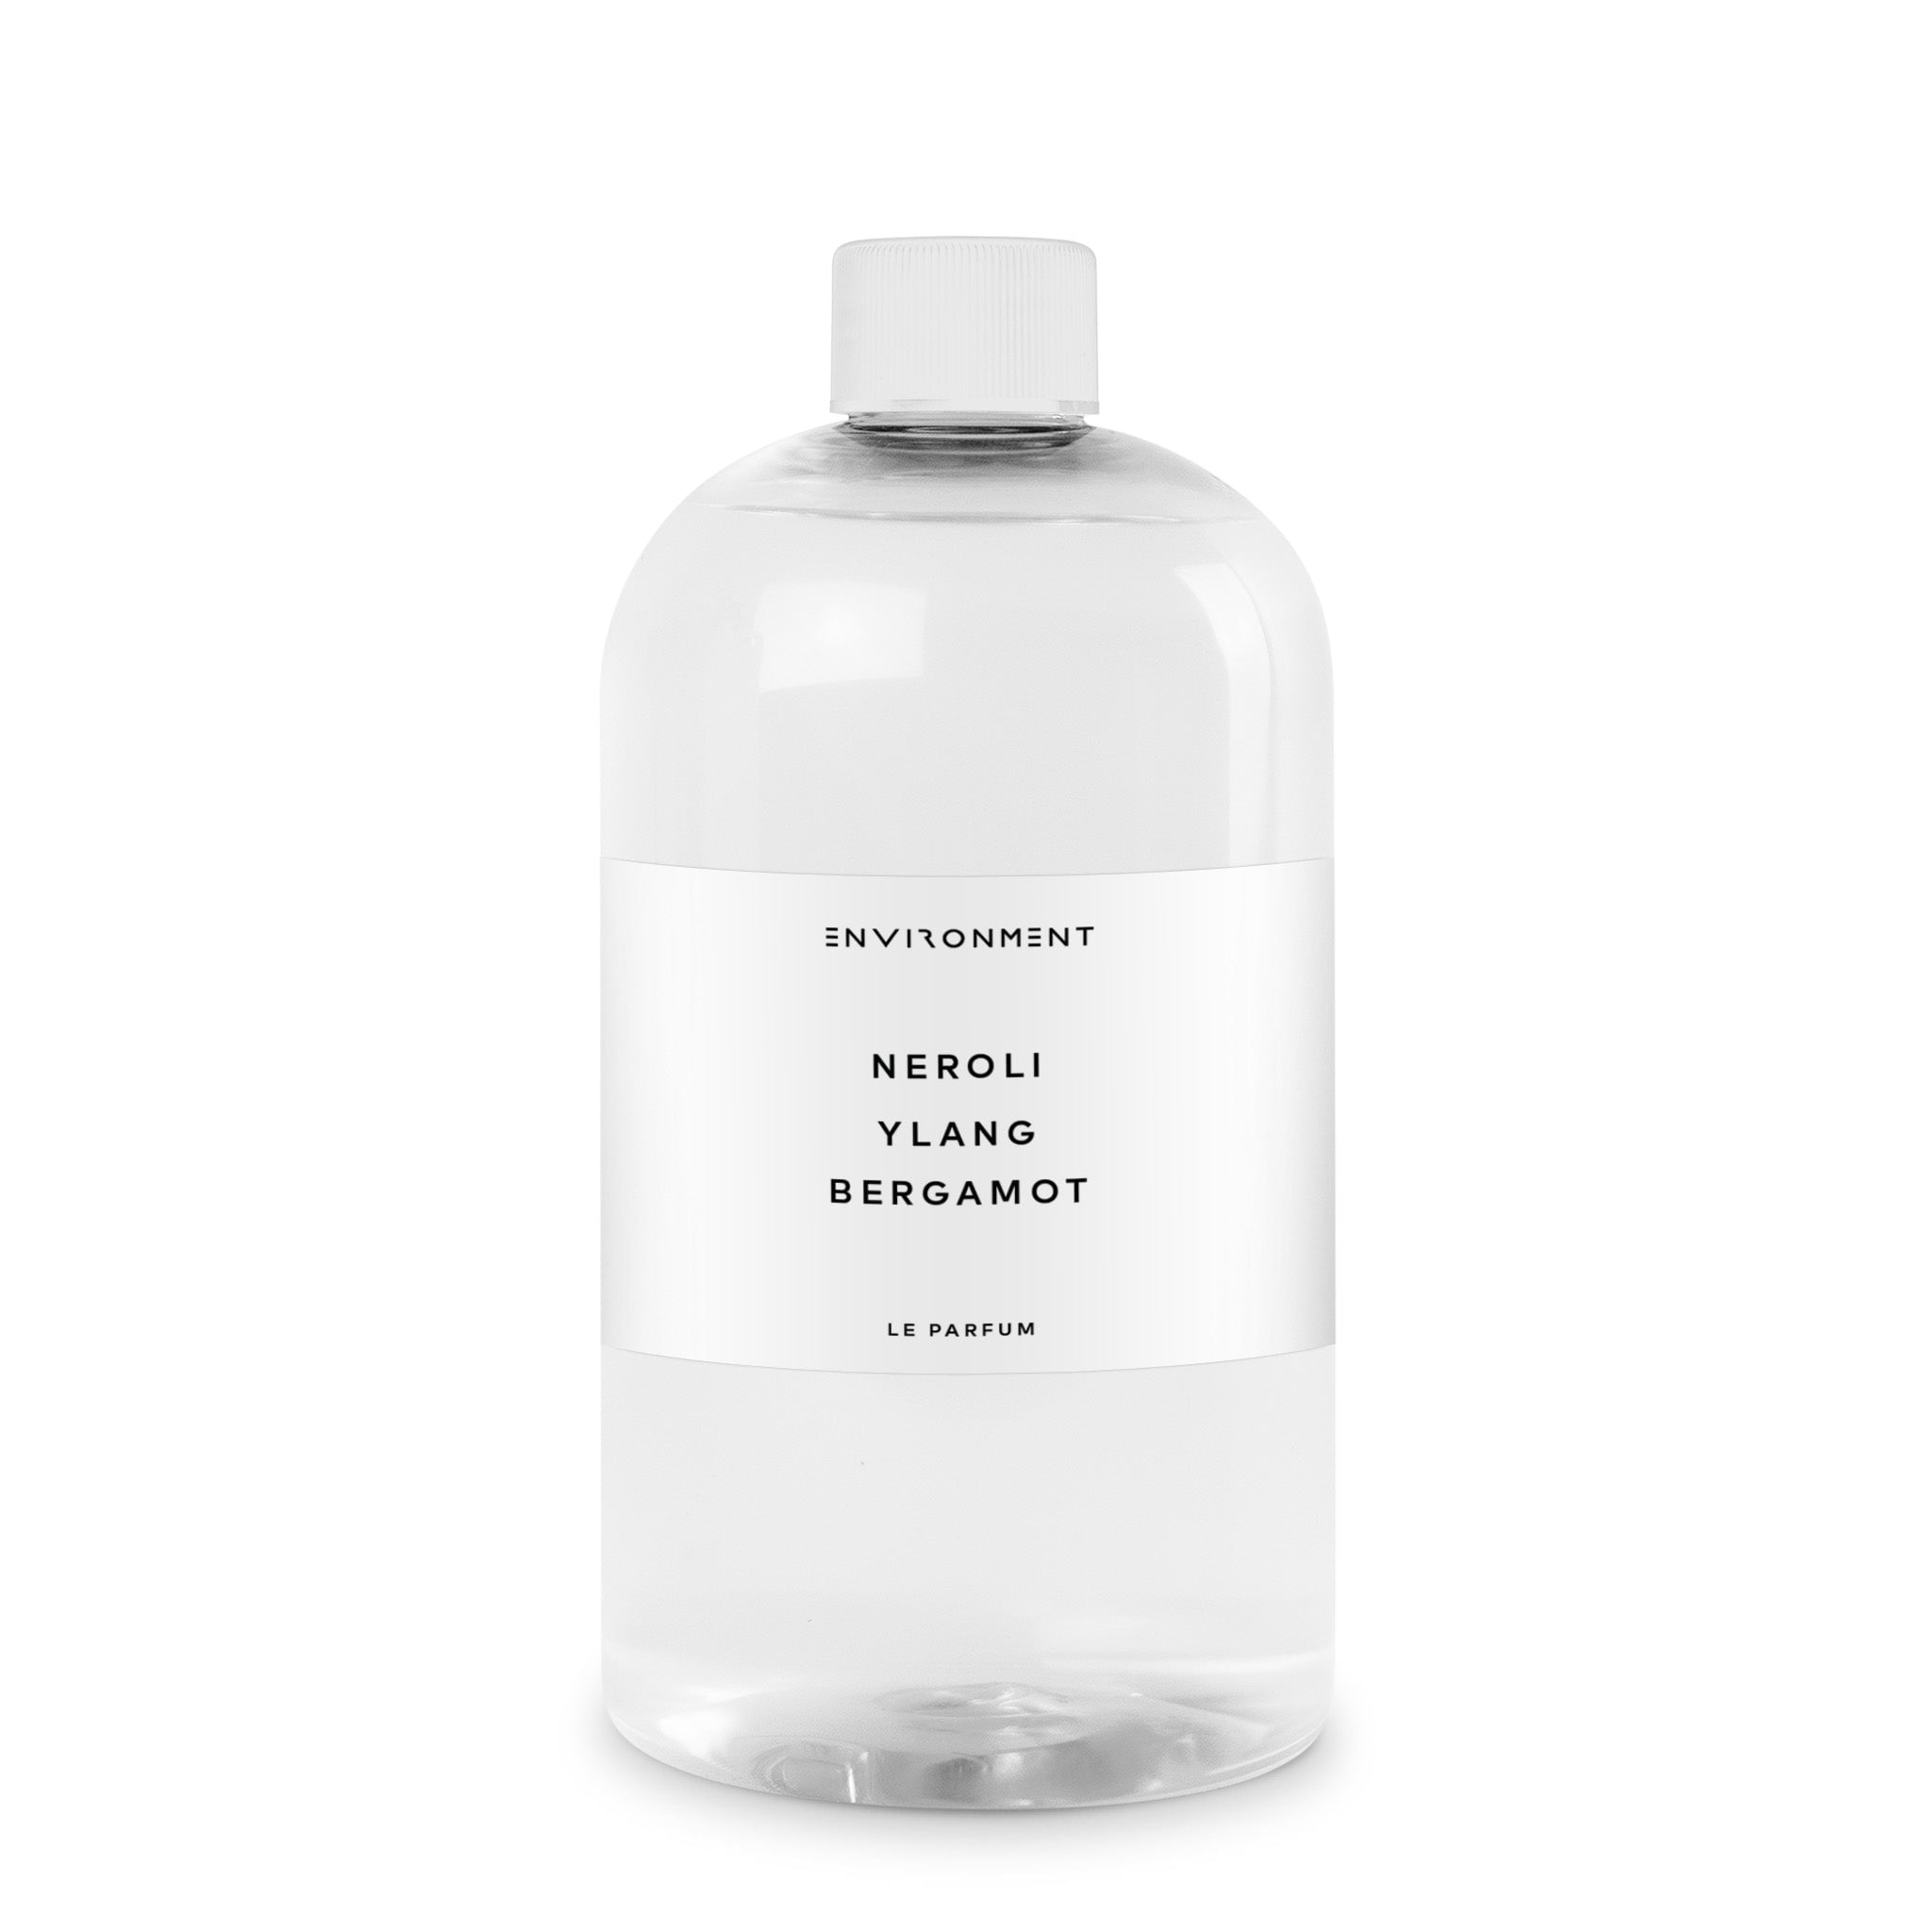 16oz Neroli | Ylang | Bergamot Diffusing Oil (Inspired by Chanel #5®)